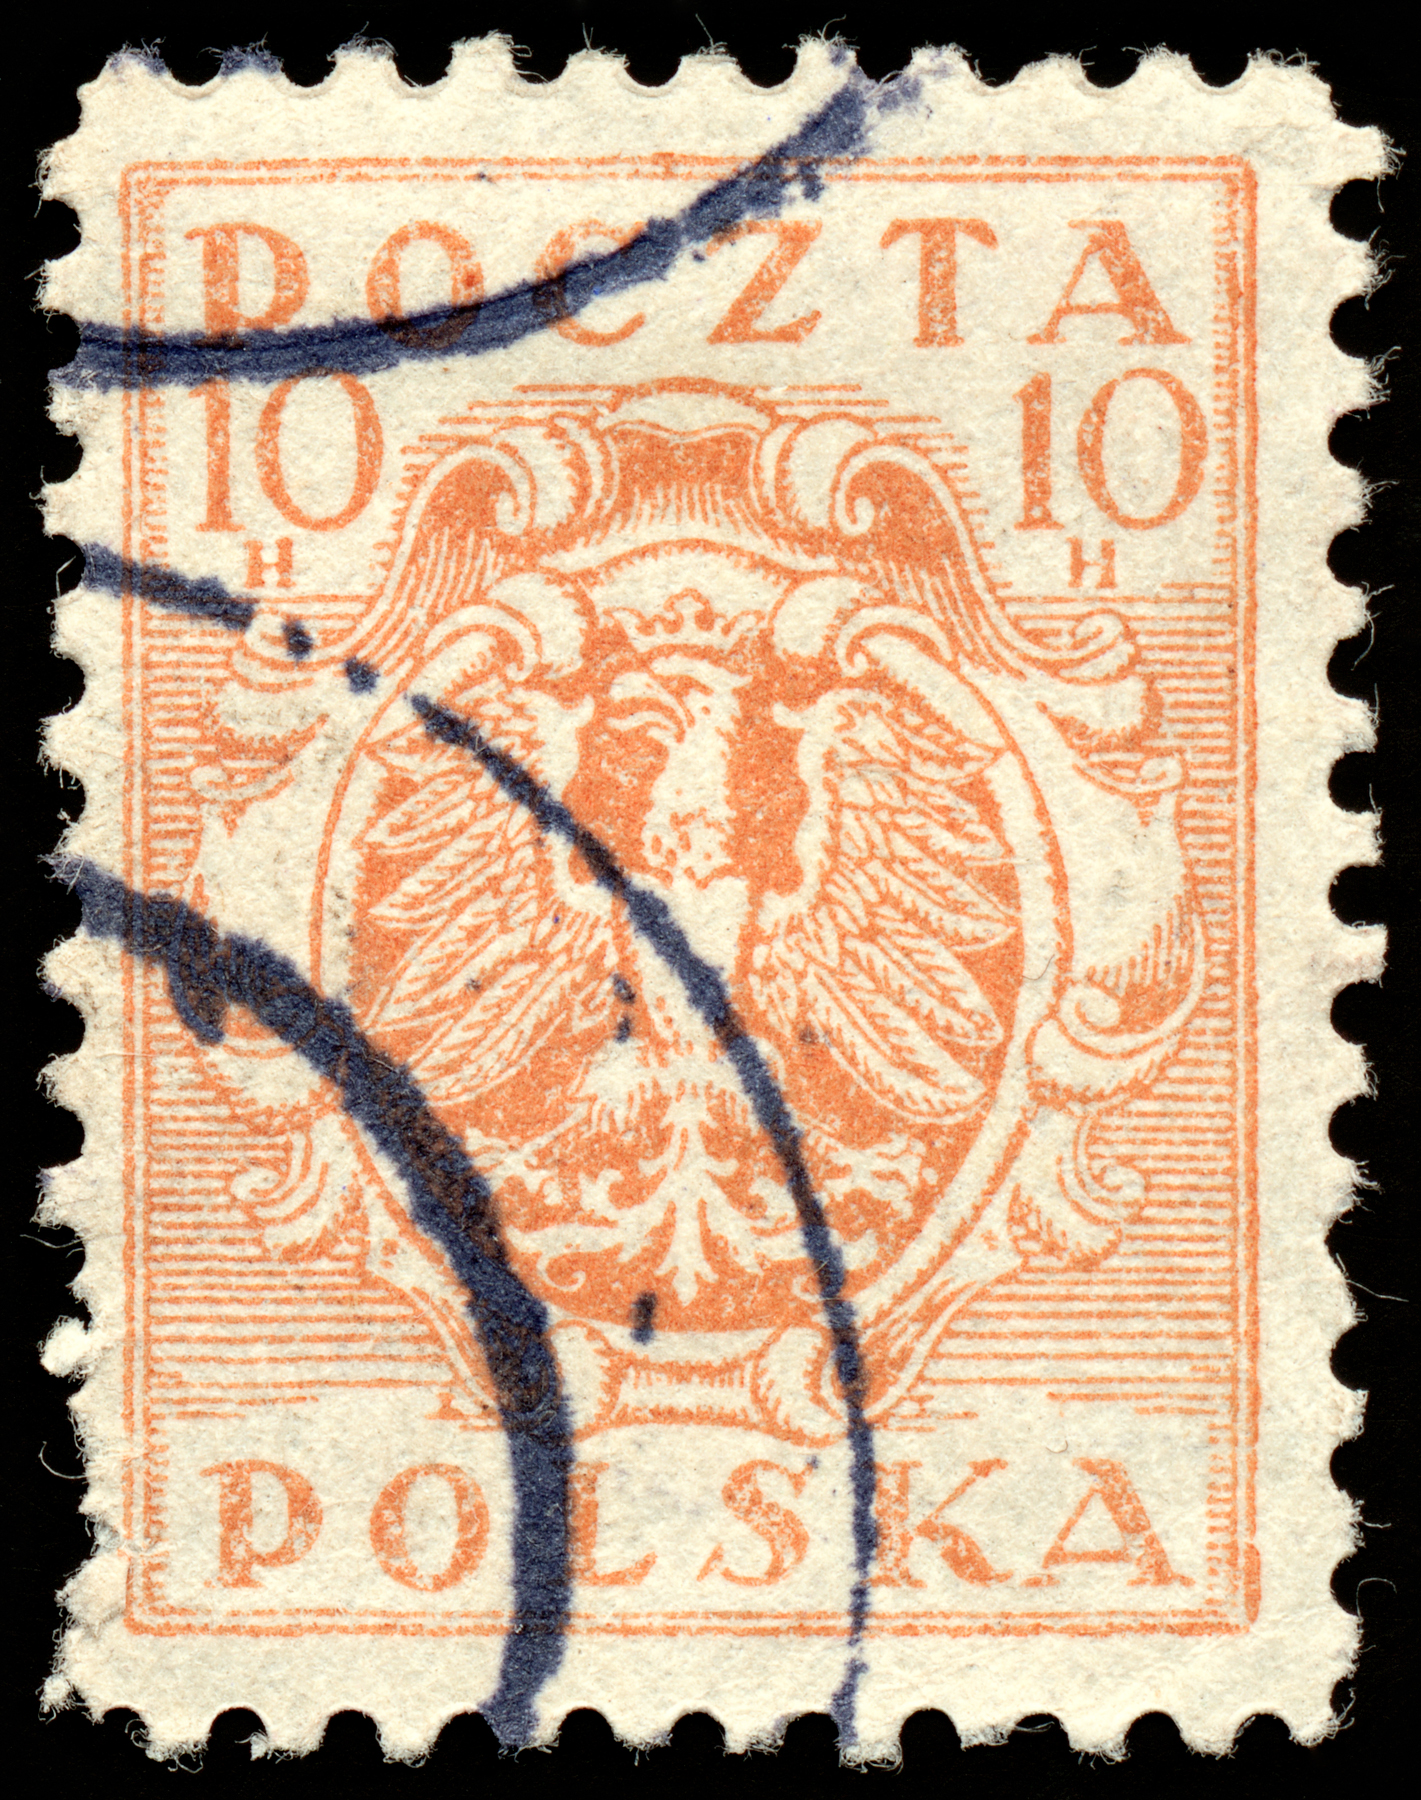 Orange eagle crest stamp photo